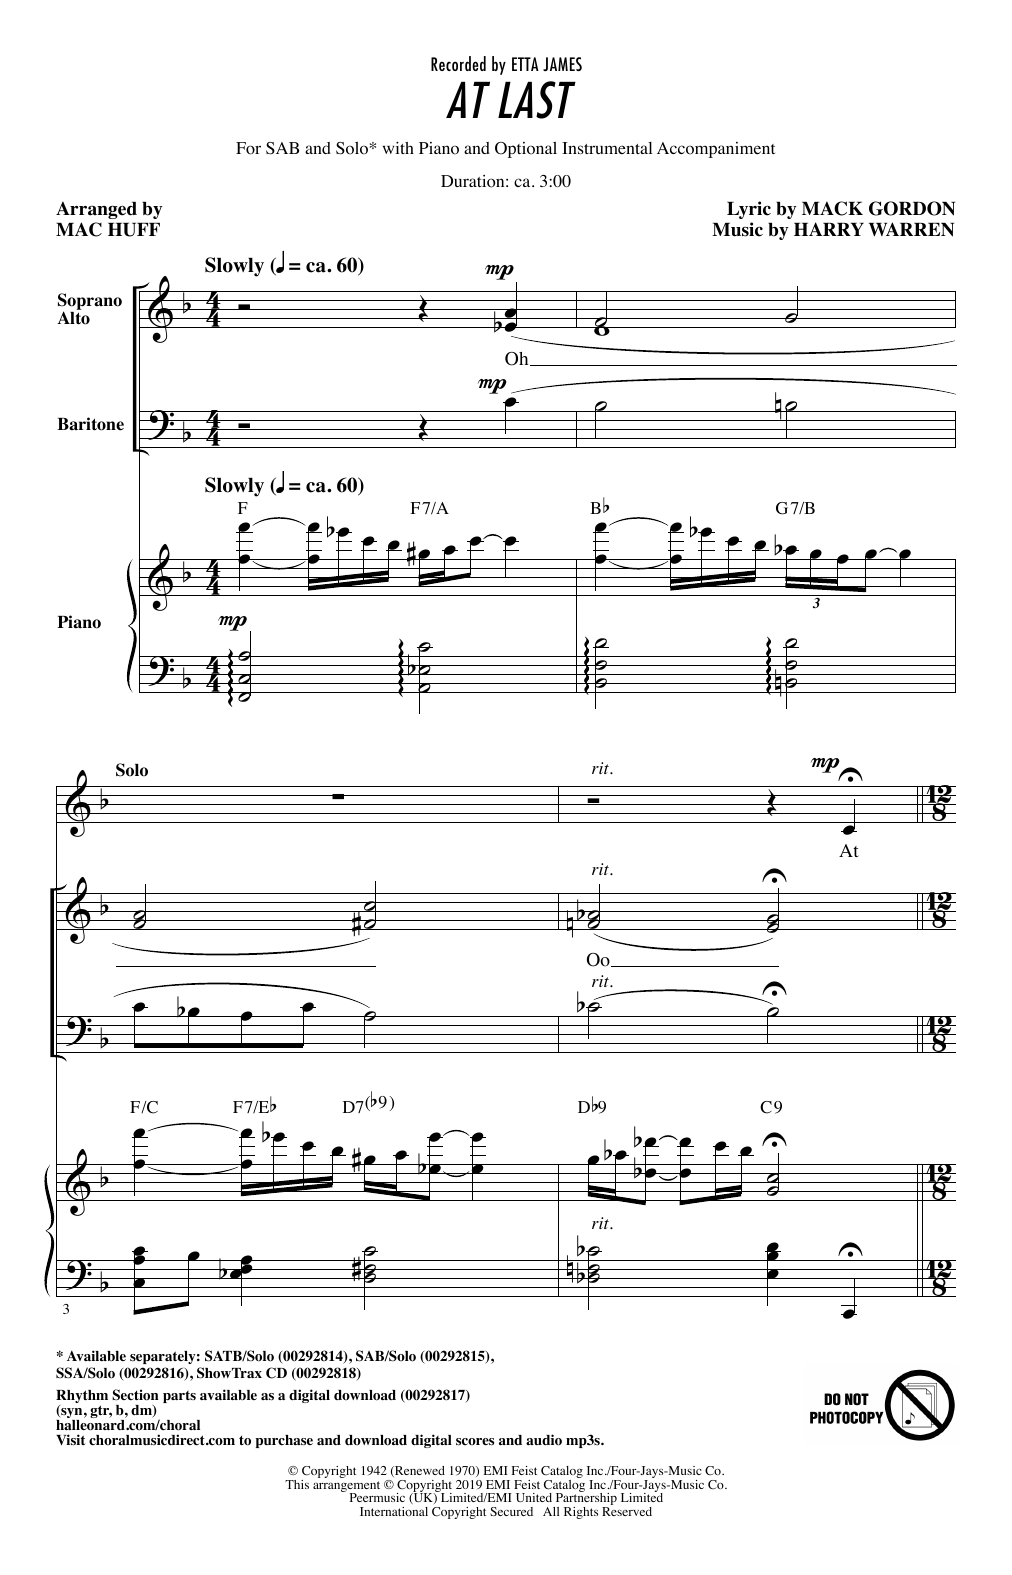 Etta James At Last (arr. Mac Huff) sheet music notes and chords arranged for SAB Choir